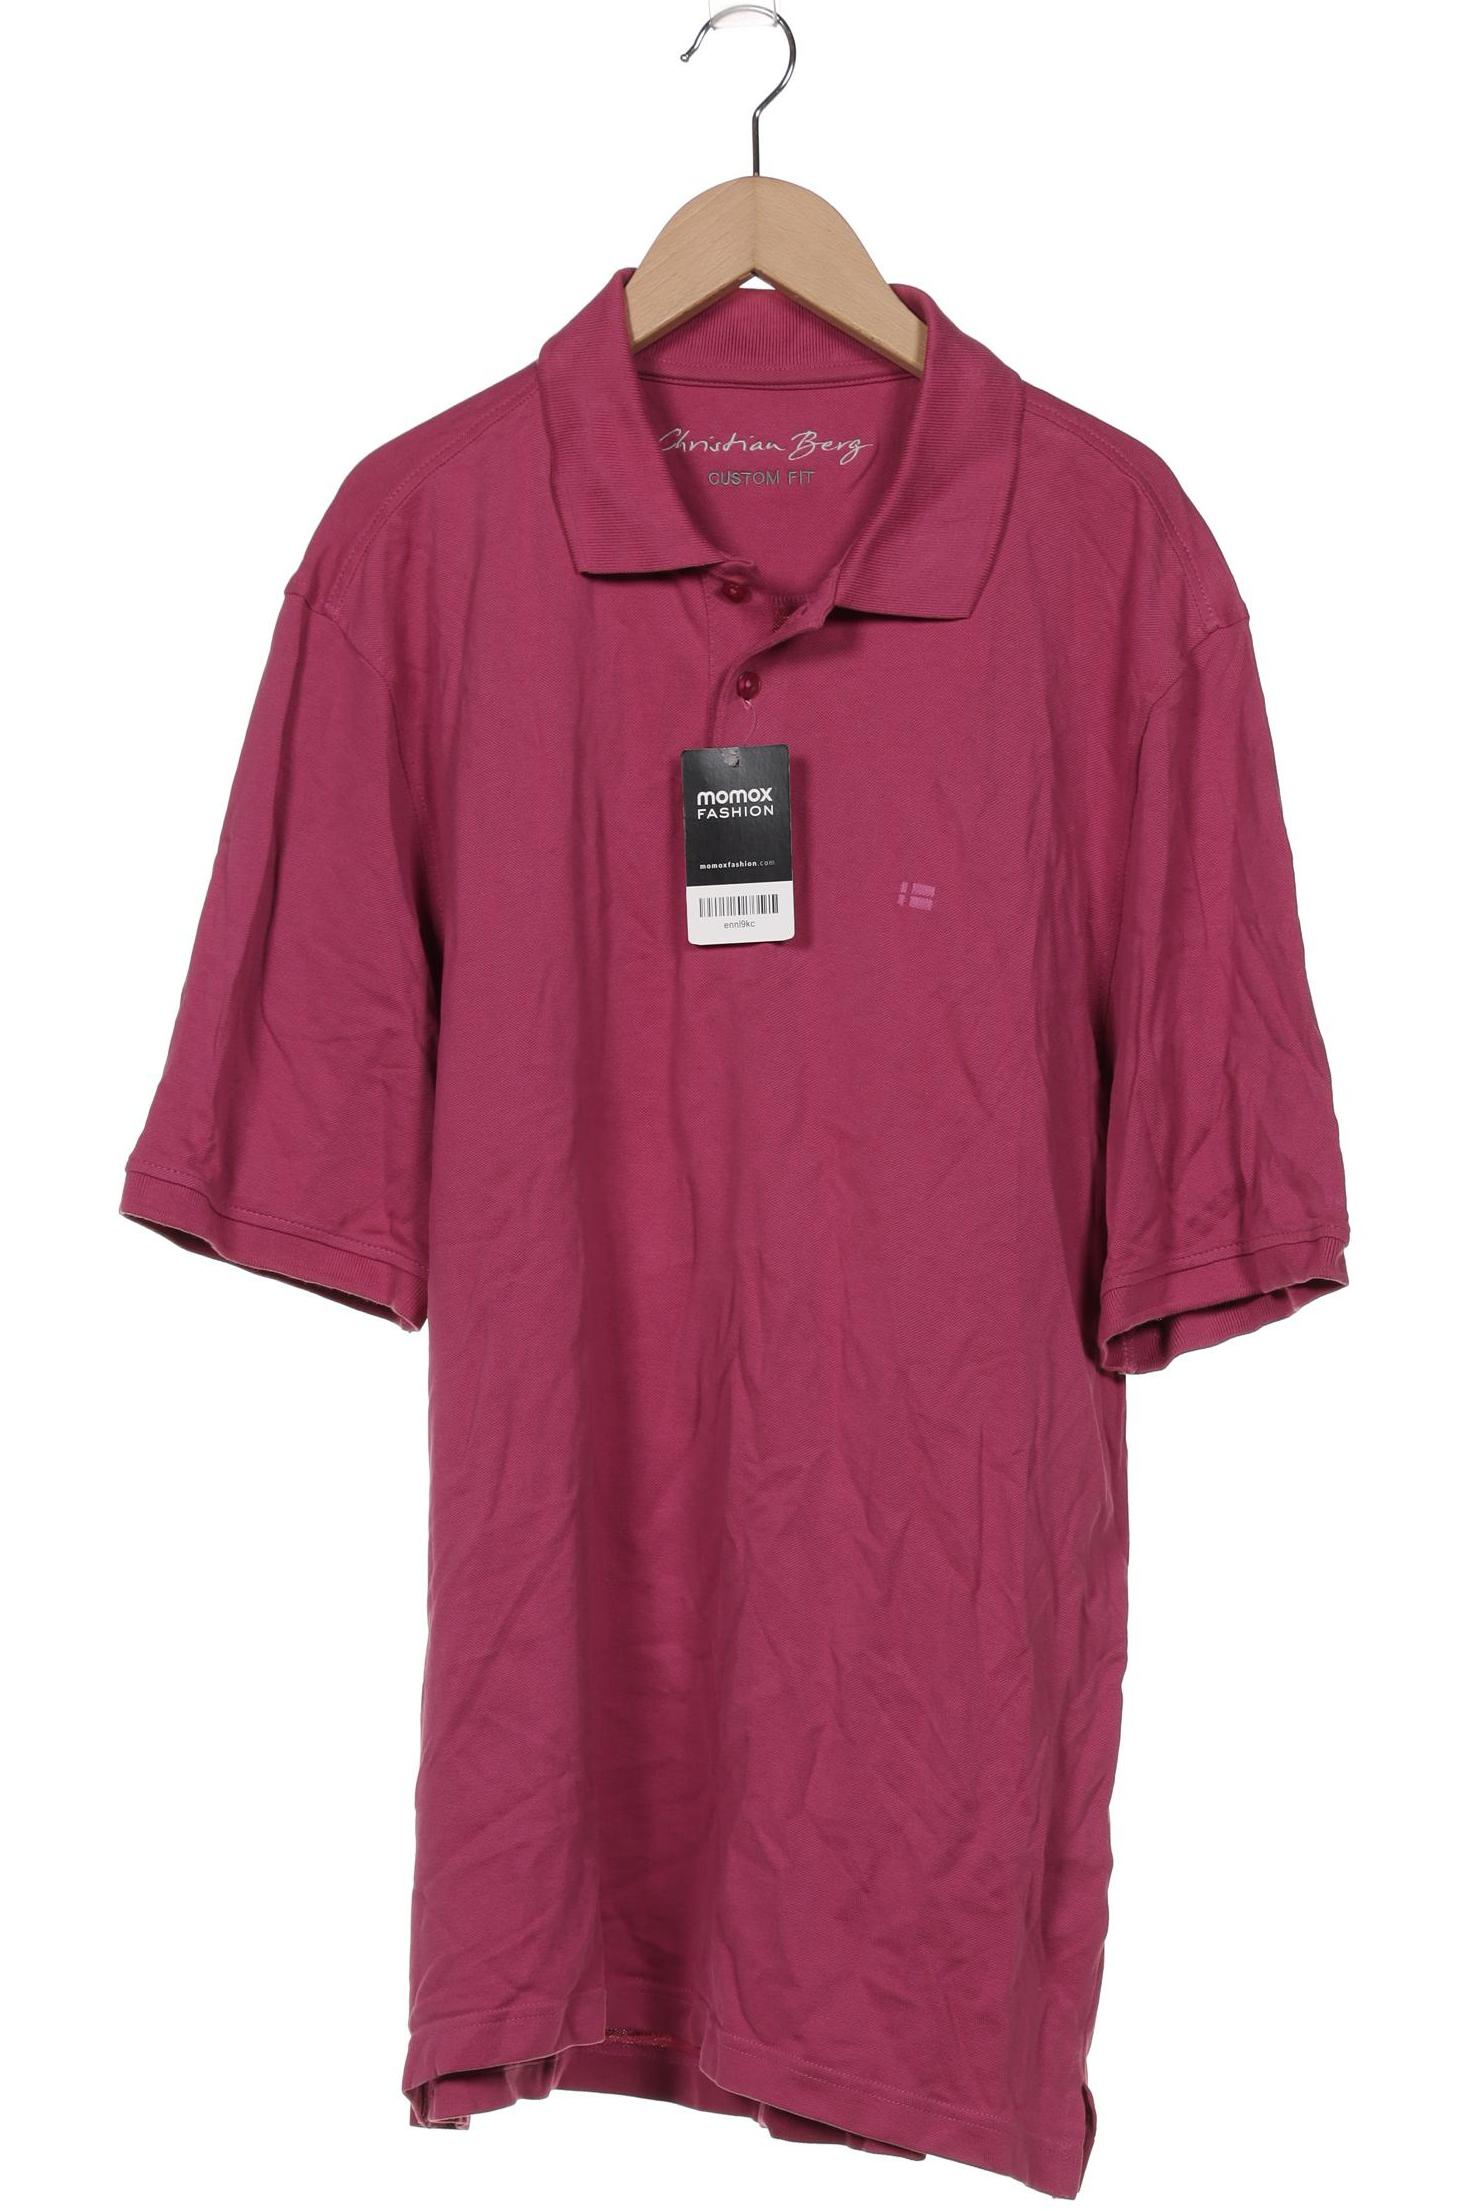 Christian Berg Herren Poloshirt, pink von christian berg